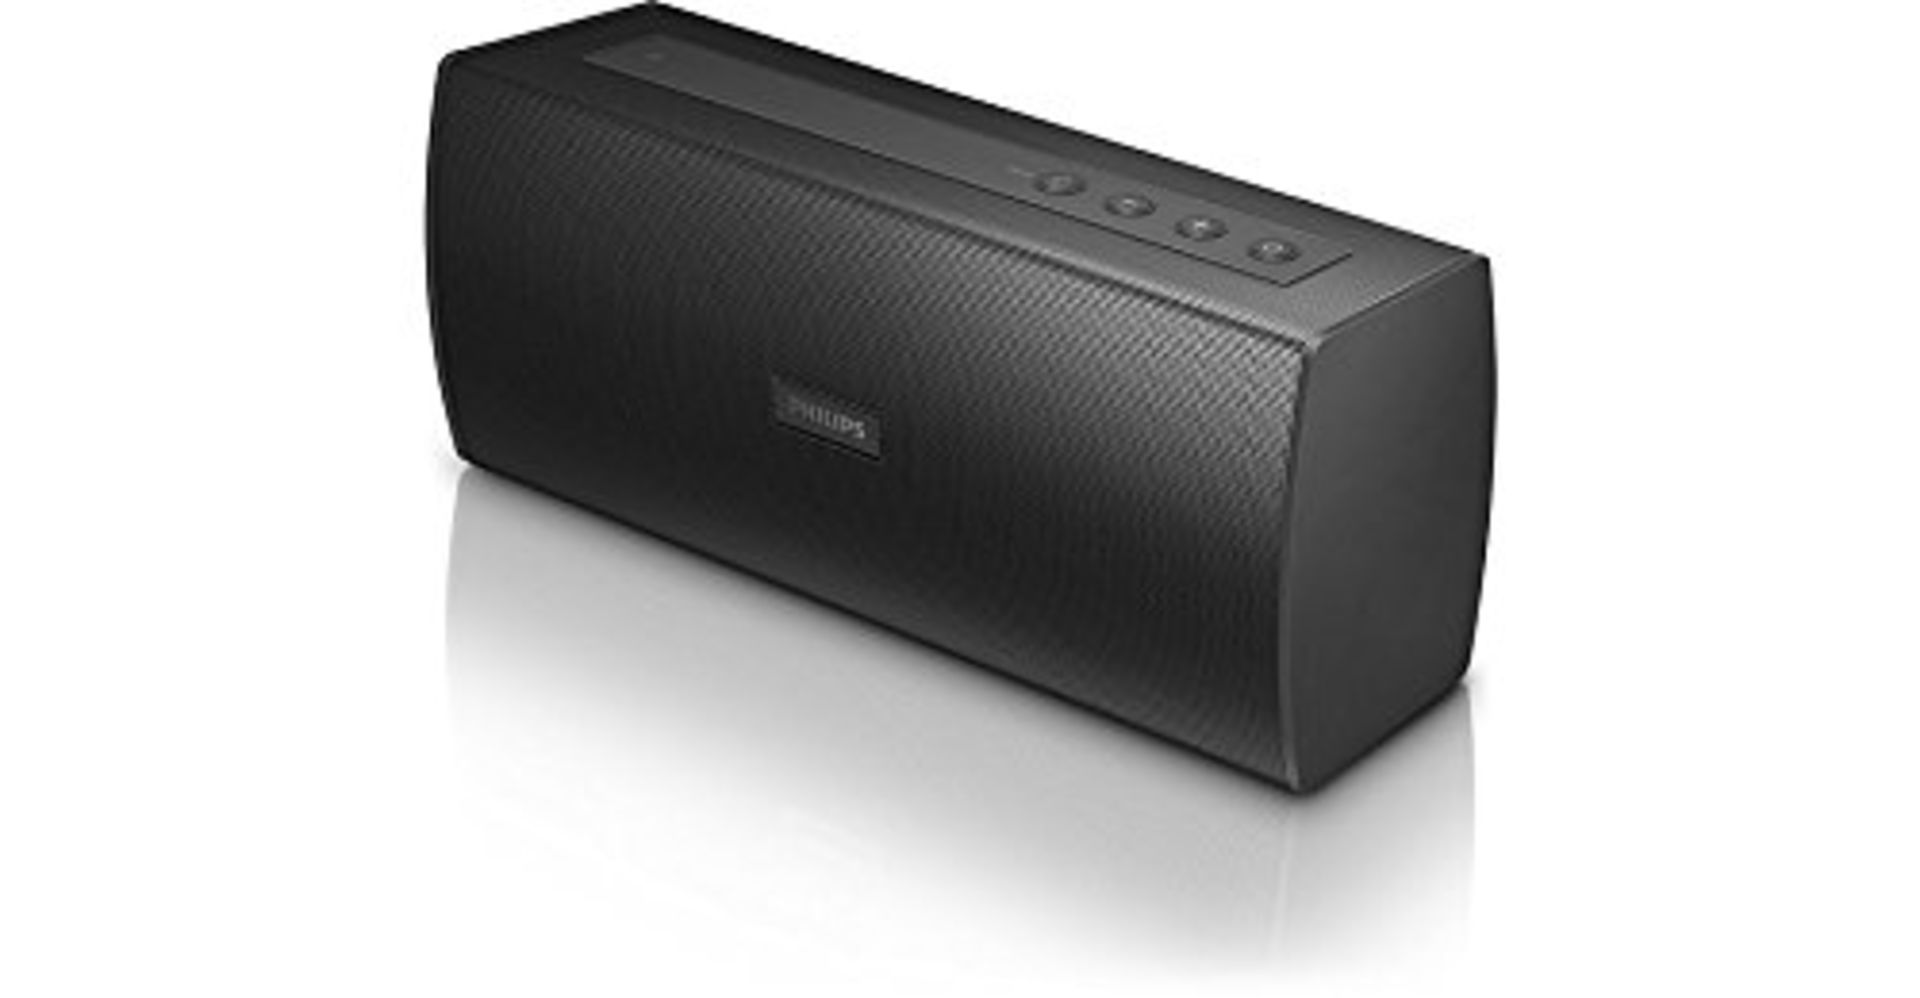 V Brand New Philips Bt3000B Wireless PC Speaker - Bass Reflex - Bluetooth streaming - Built in